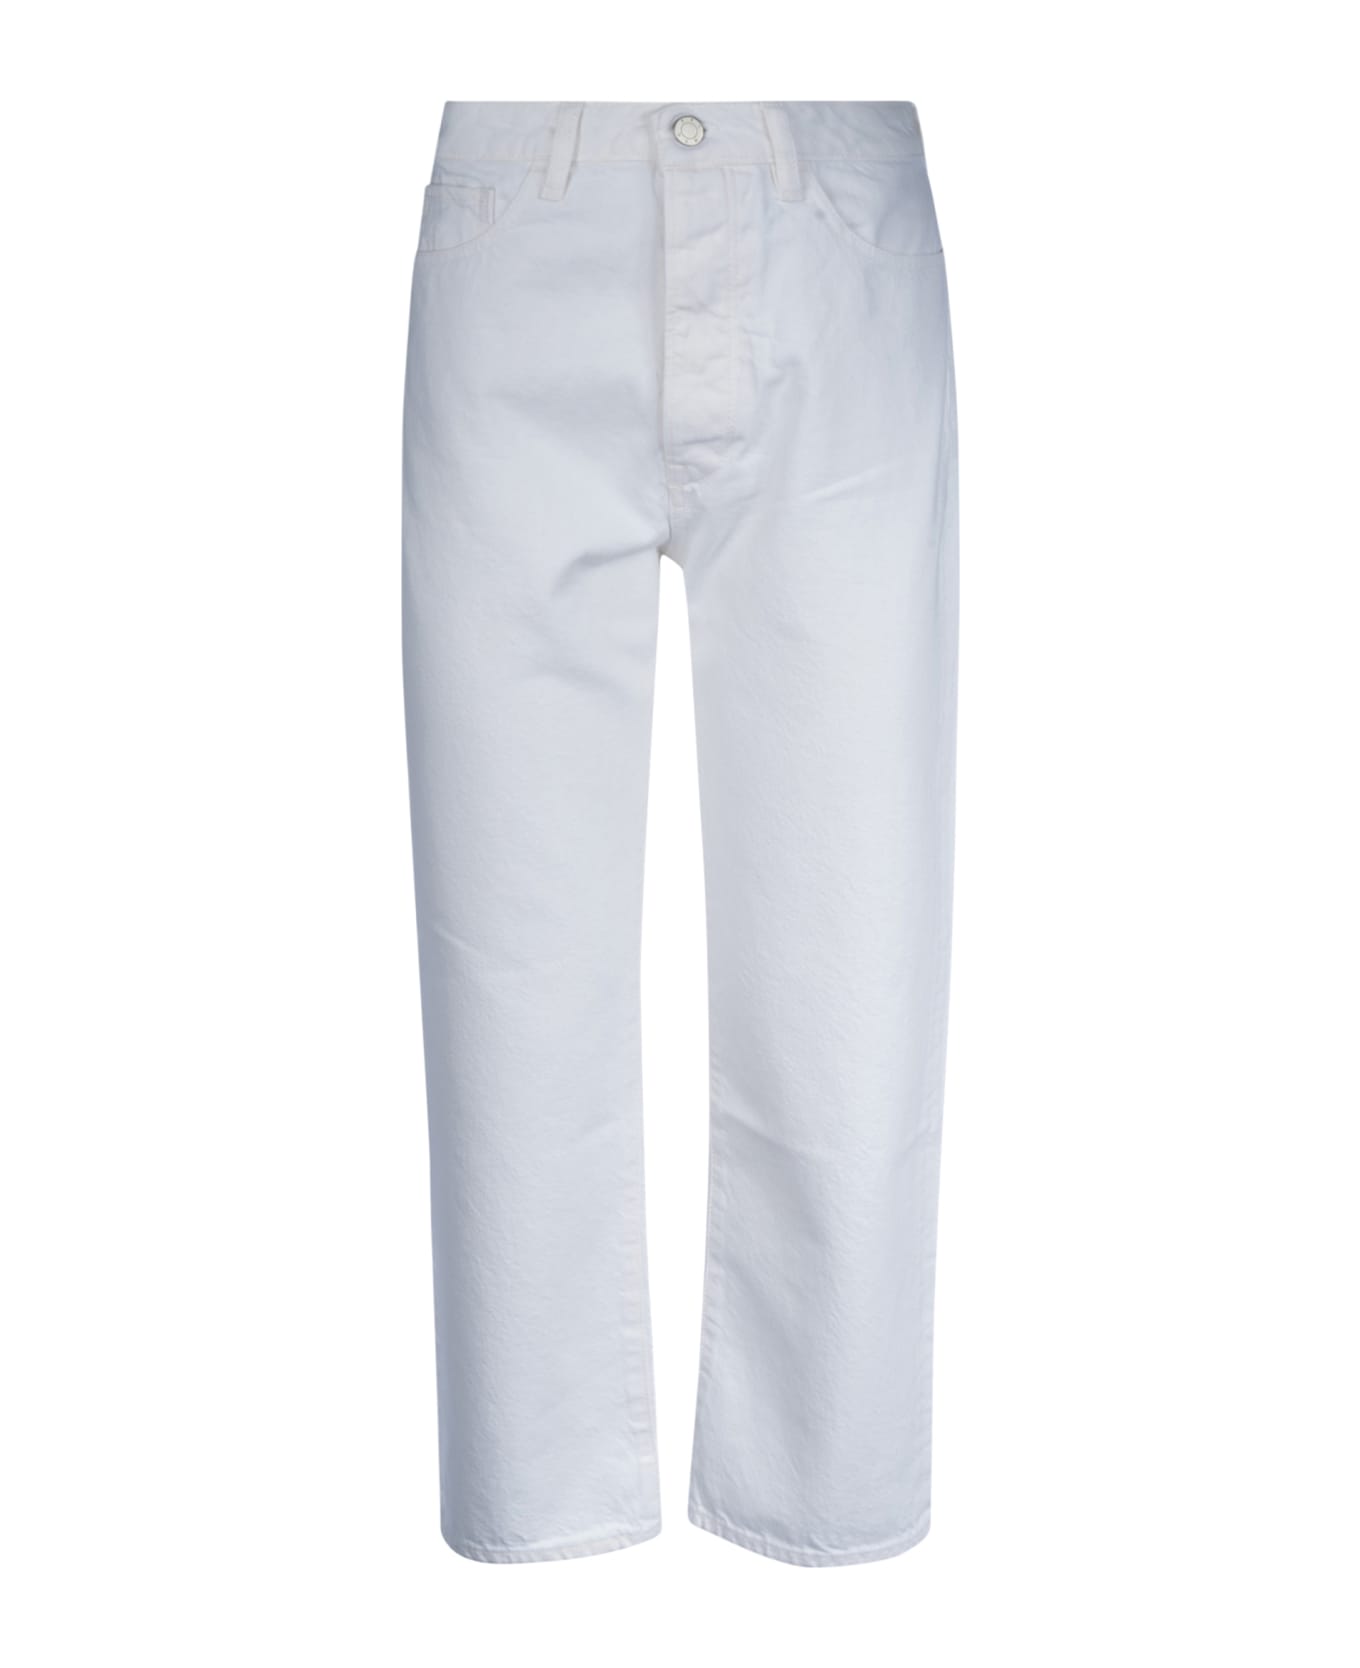 3x1 Sabina Girlfriend Core Jeans - Optic White